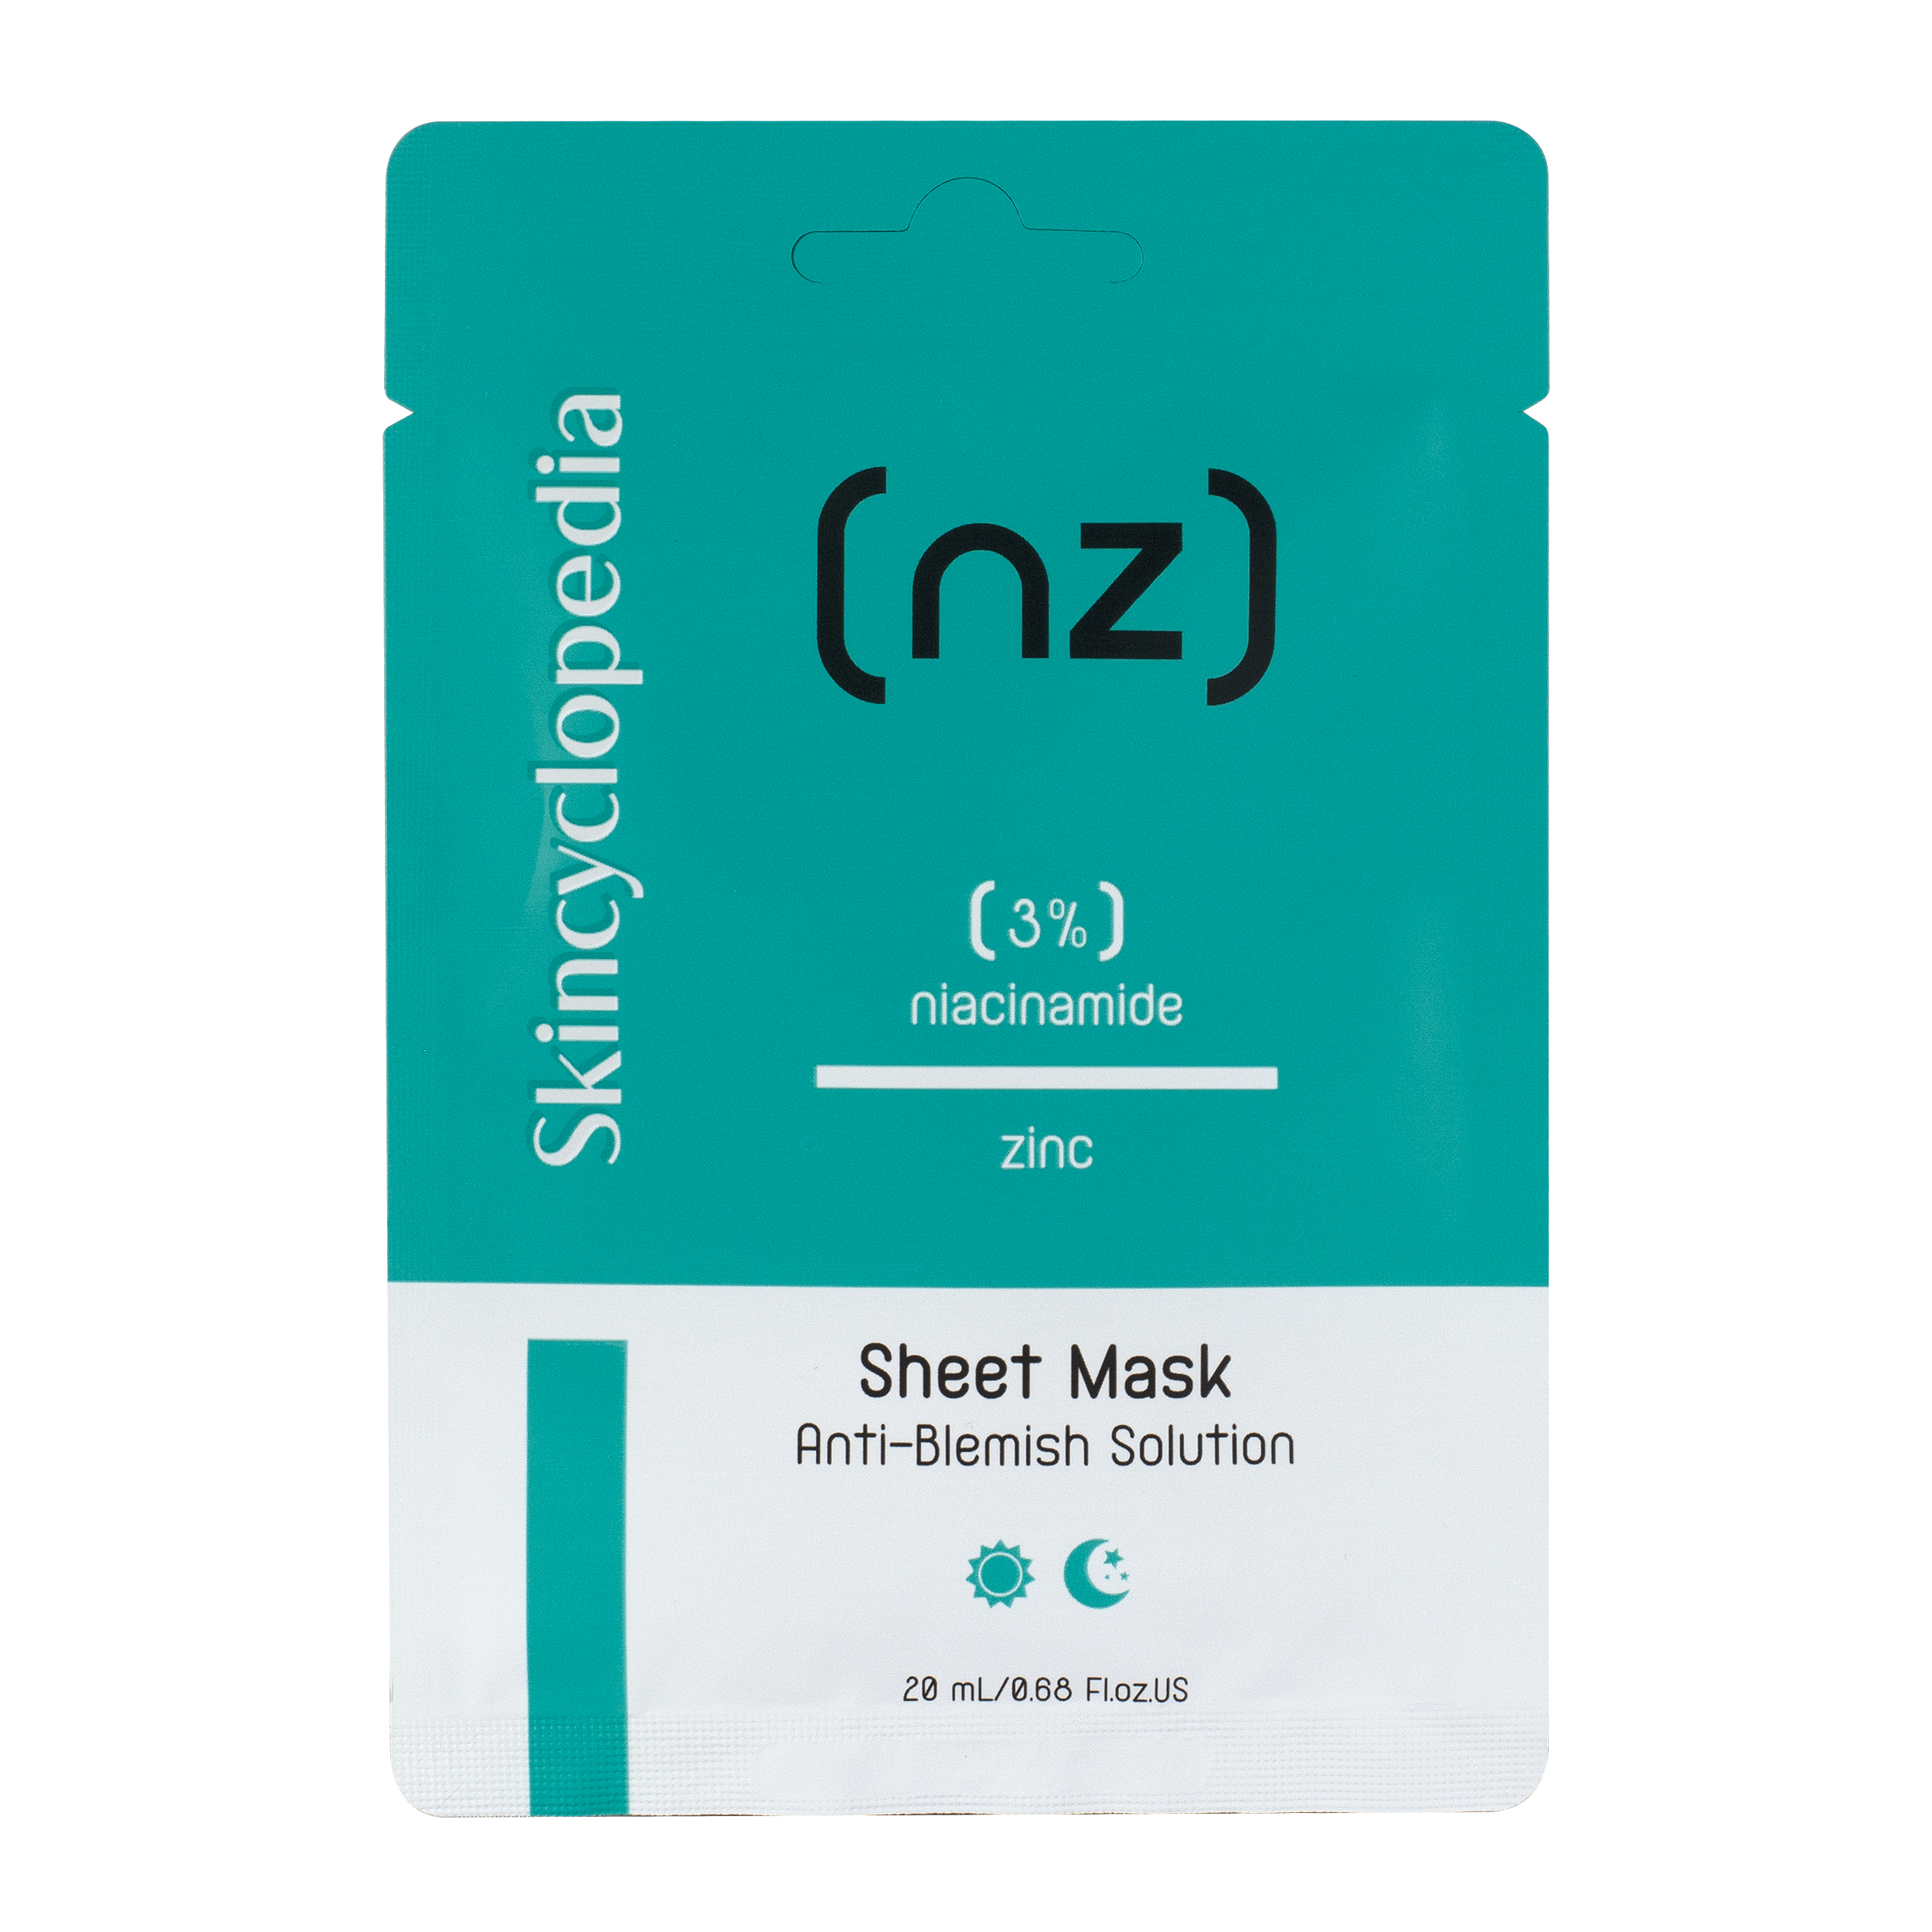 SKINCYCLOPEDIA Sheet Mask Niacinamide 3% Zinc 20ml